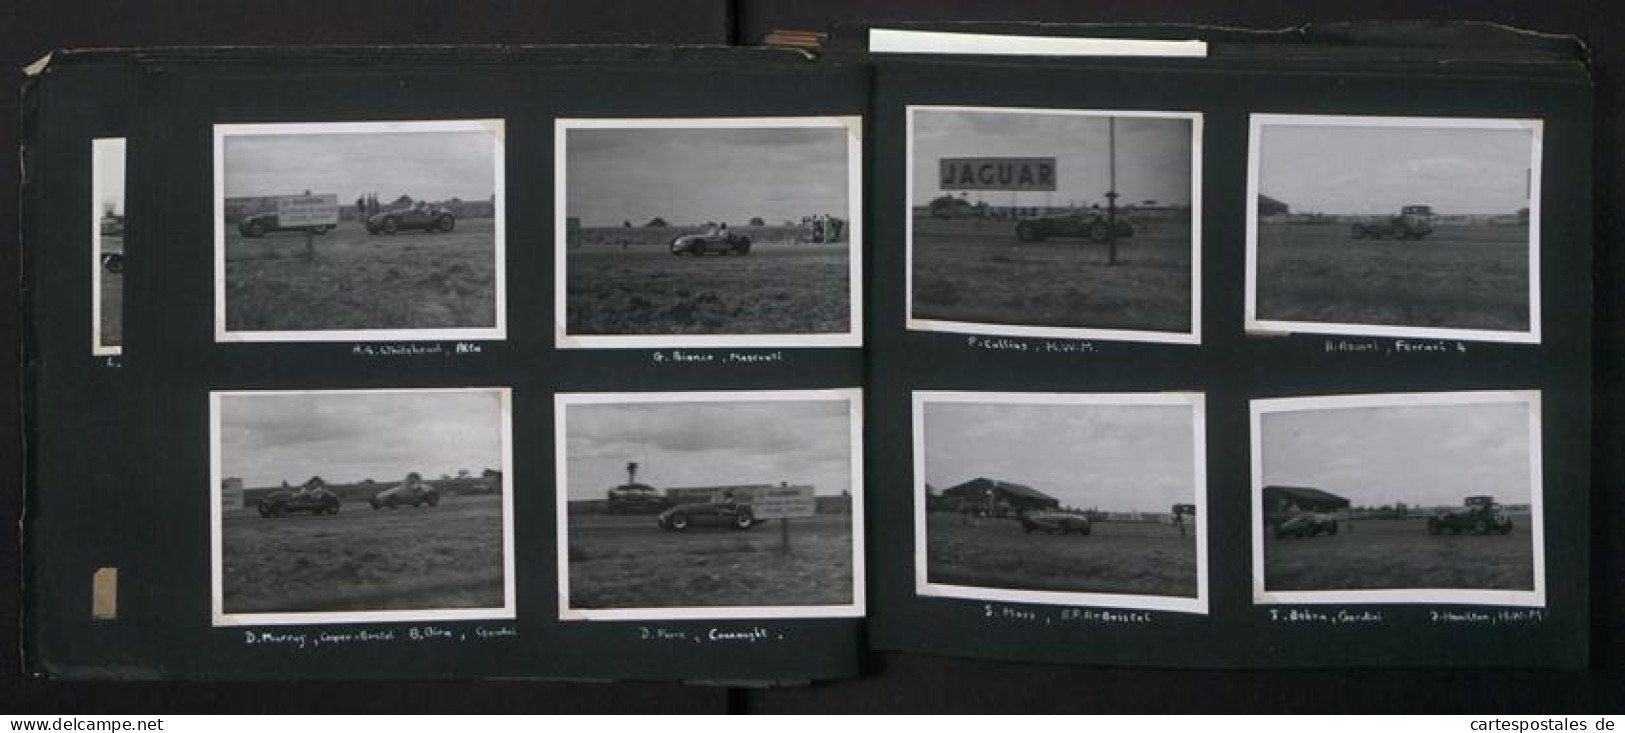 Fotoalbum mit 232 Fotografien Road Raceing 1952-1957, Goodwood, Silverstone, Autorennen, Motorrad, Ferrari, Mercedes 